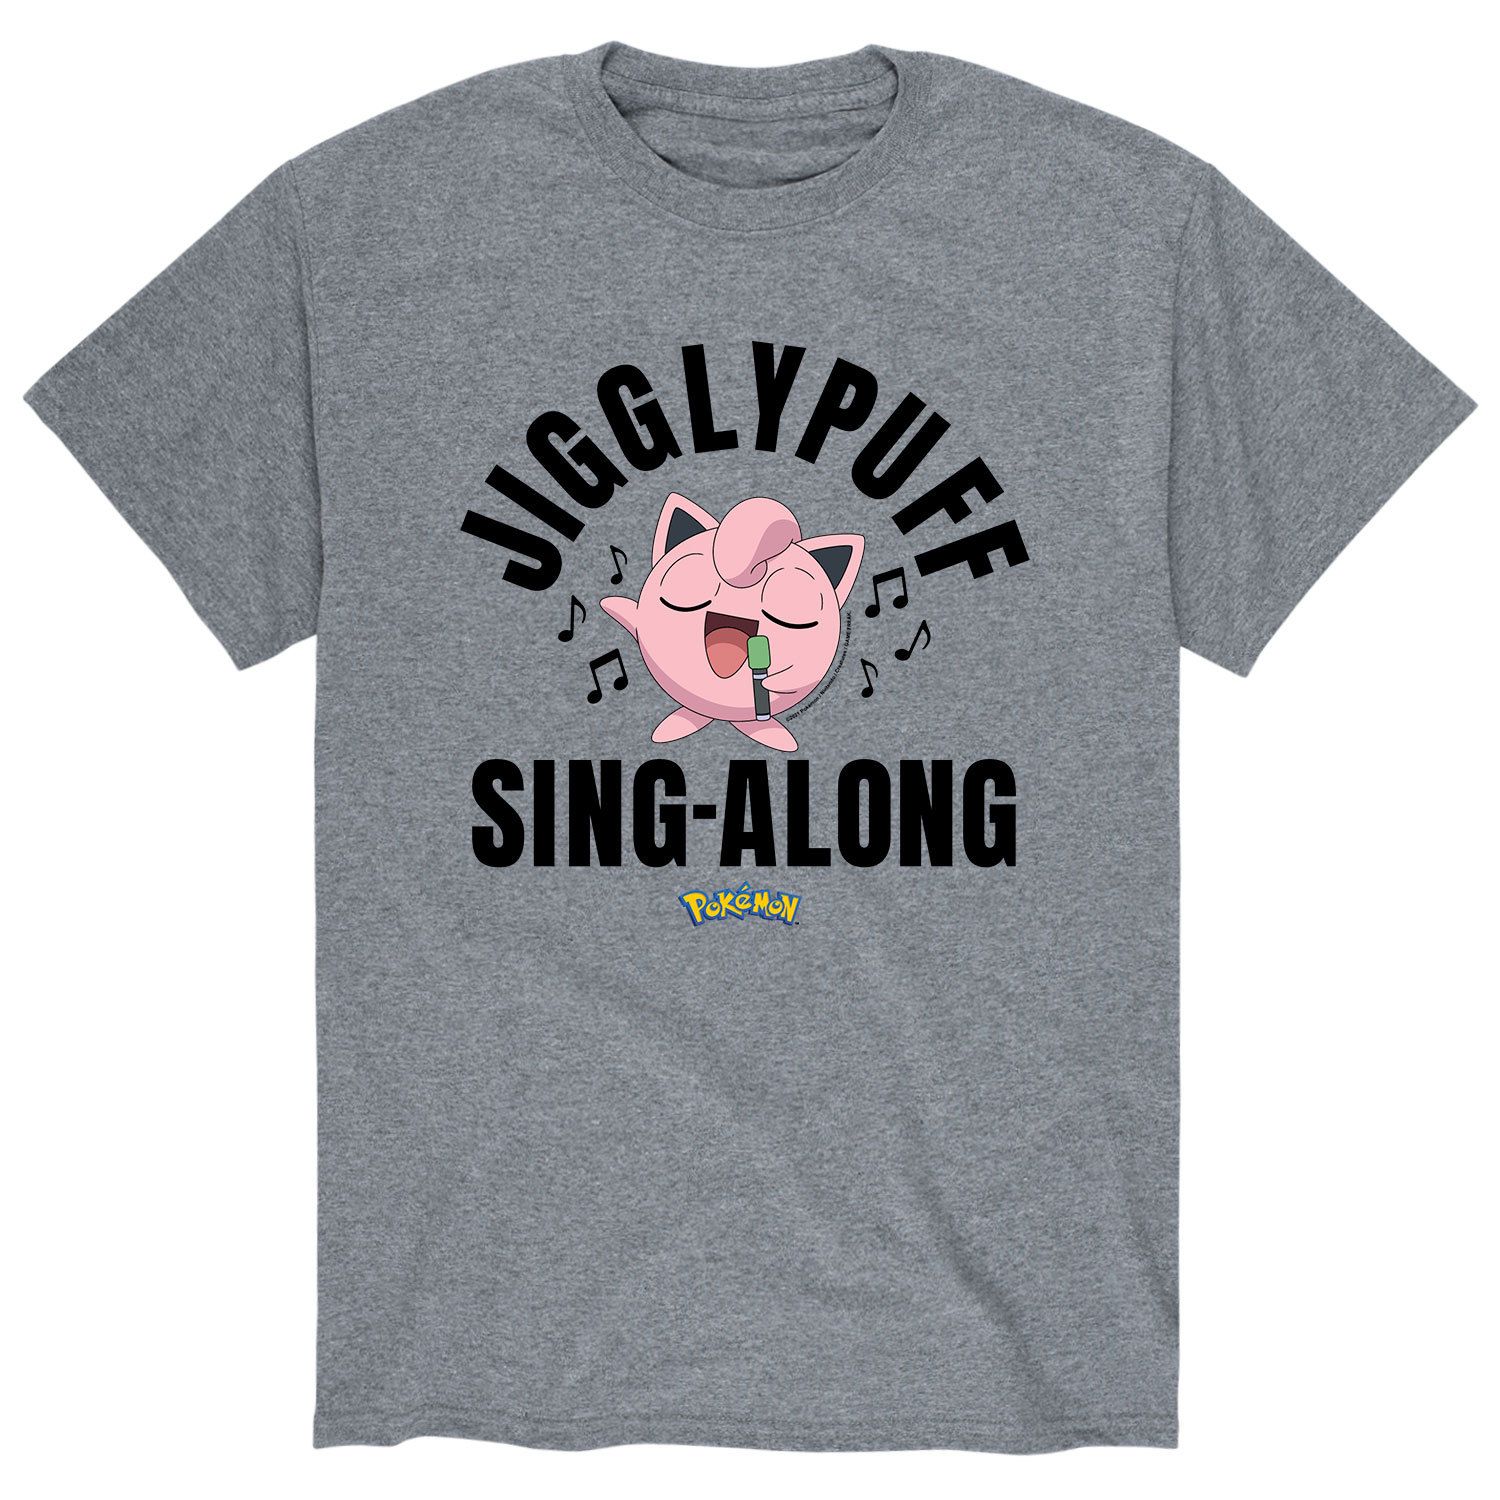 Мужская футболка с надписью Pokémon Jigglypuff Sing-Along Licensed Character